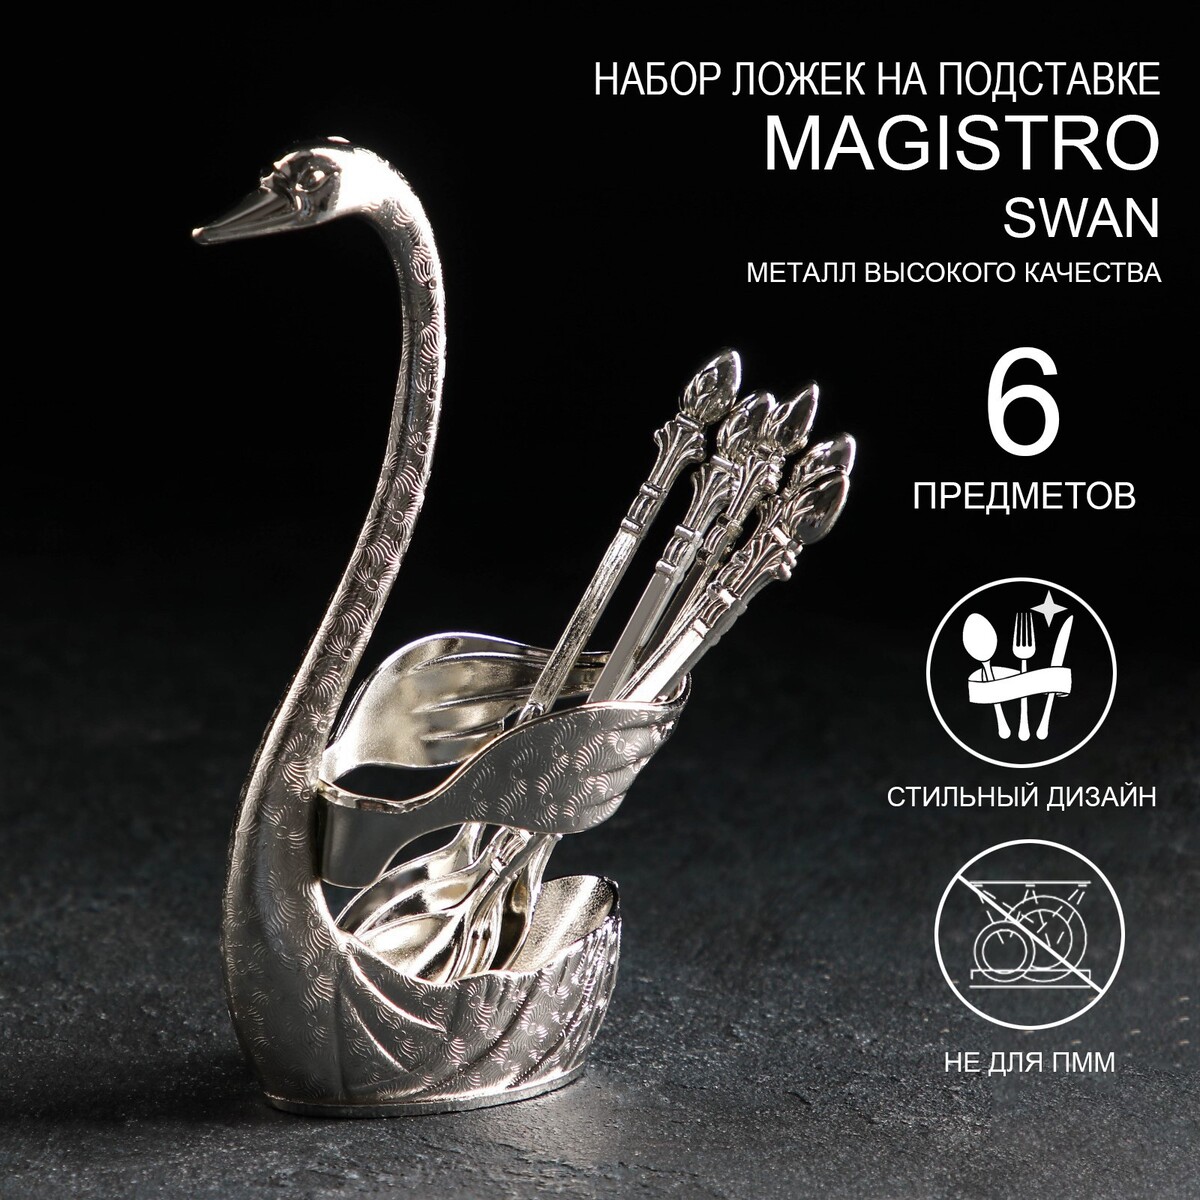     magistro swan, 7, 5 5 15 , 6 ,  